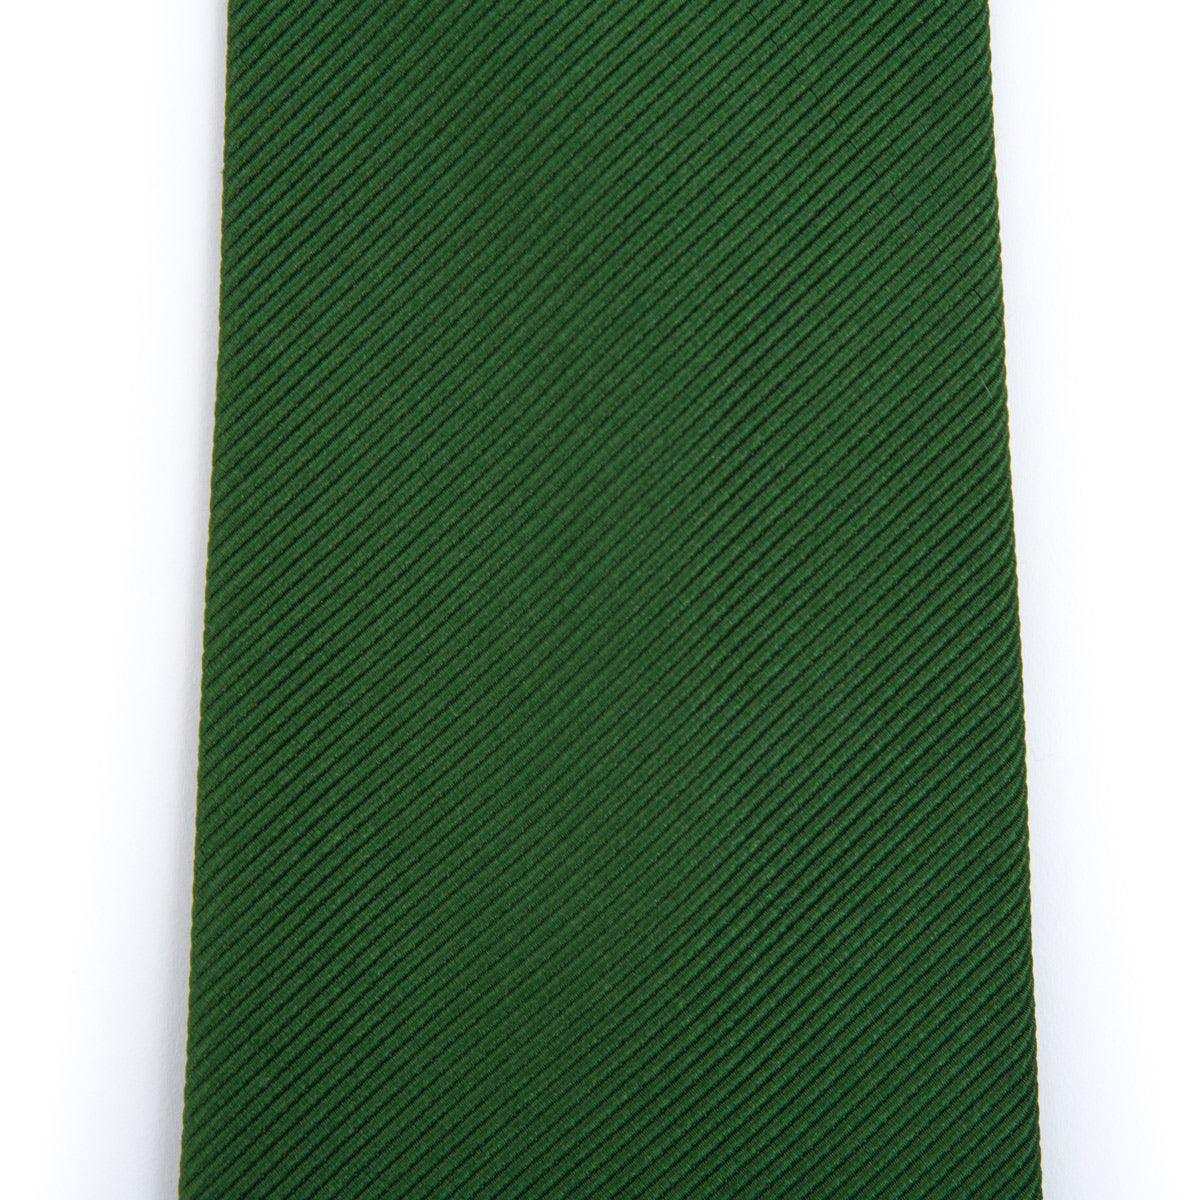 Green plain tie